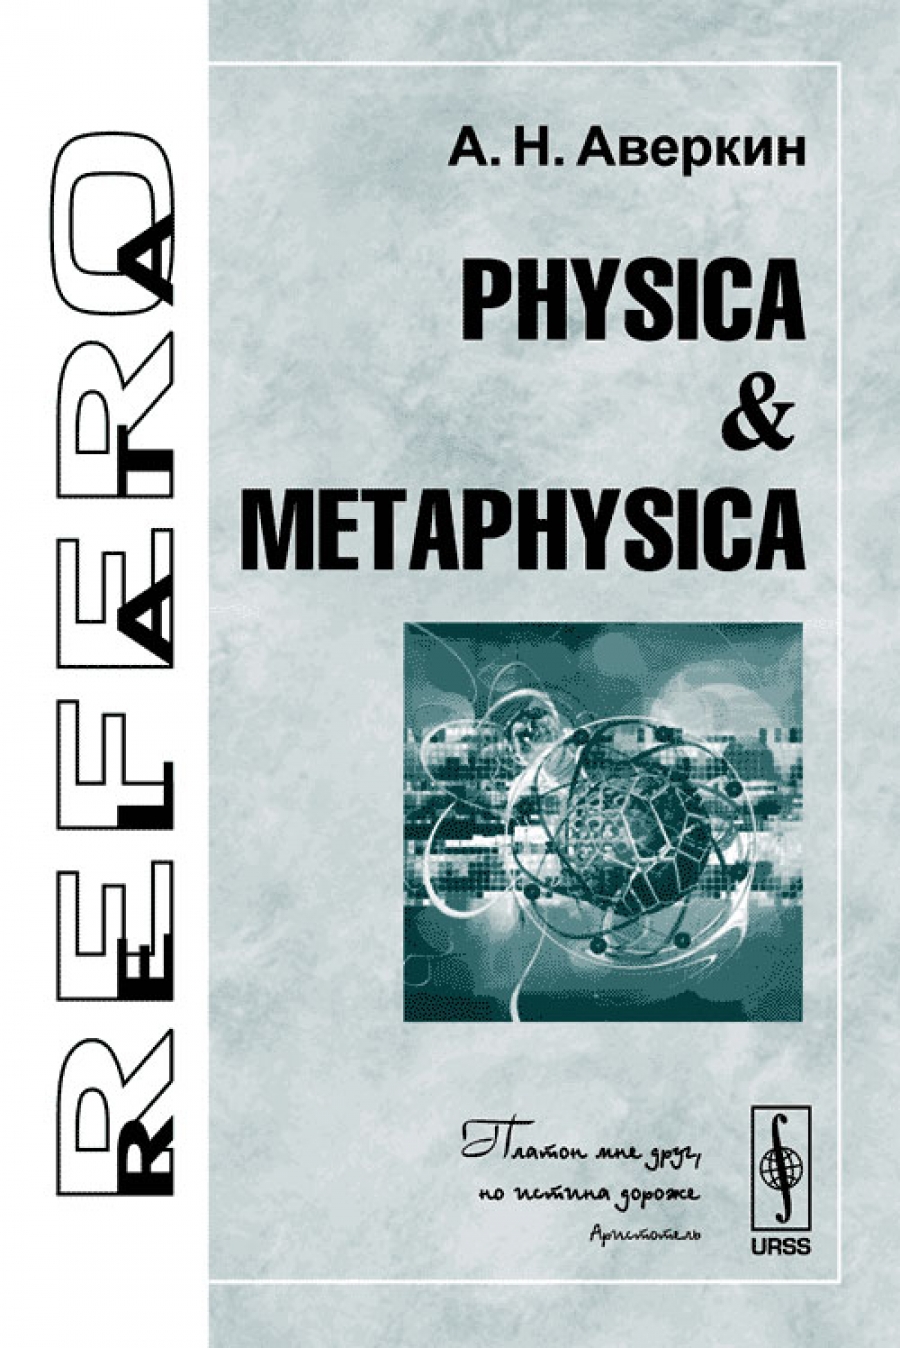  .. Physica & Metaphysica 